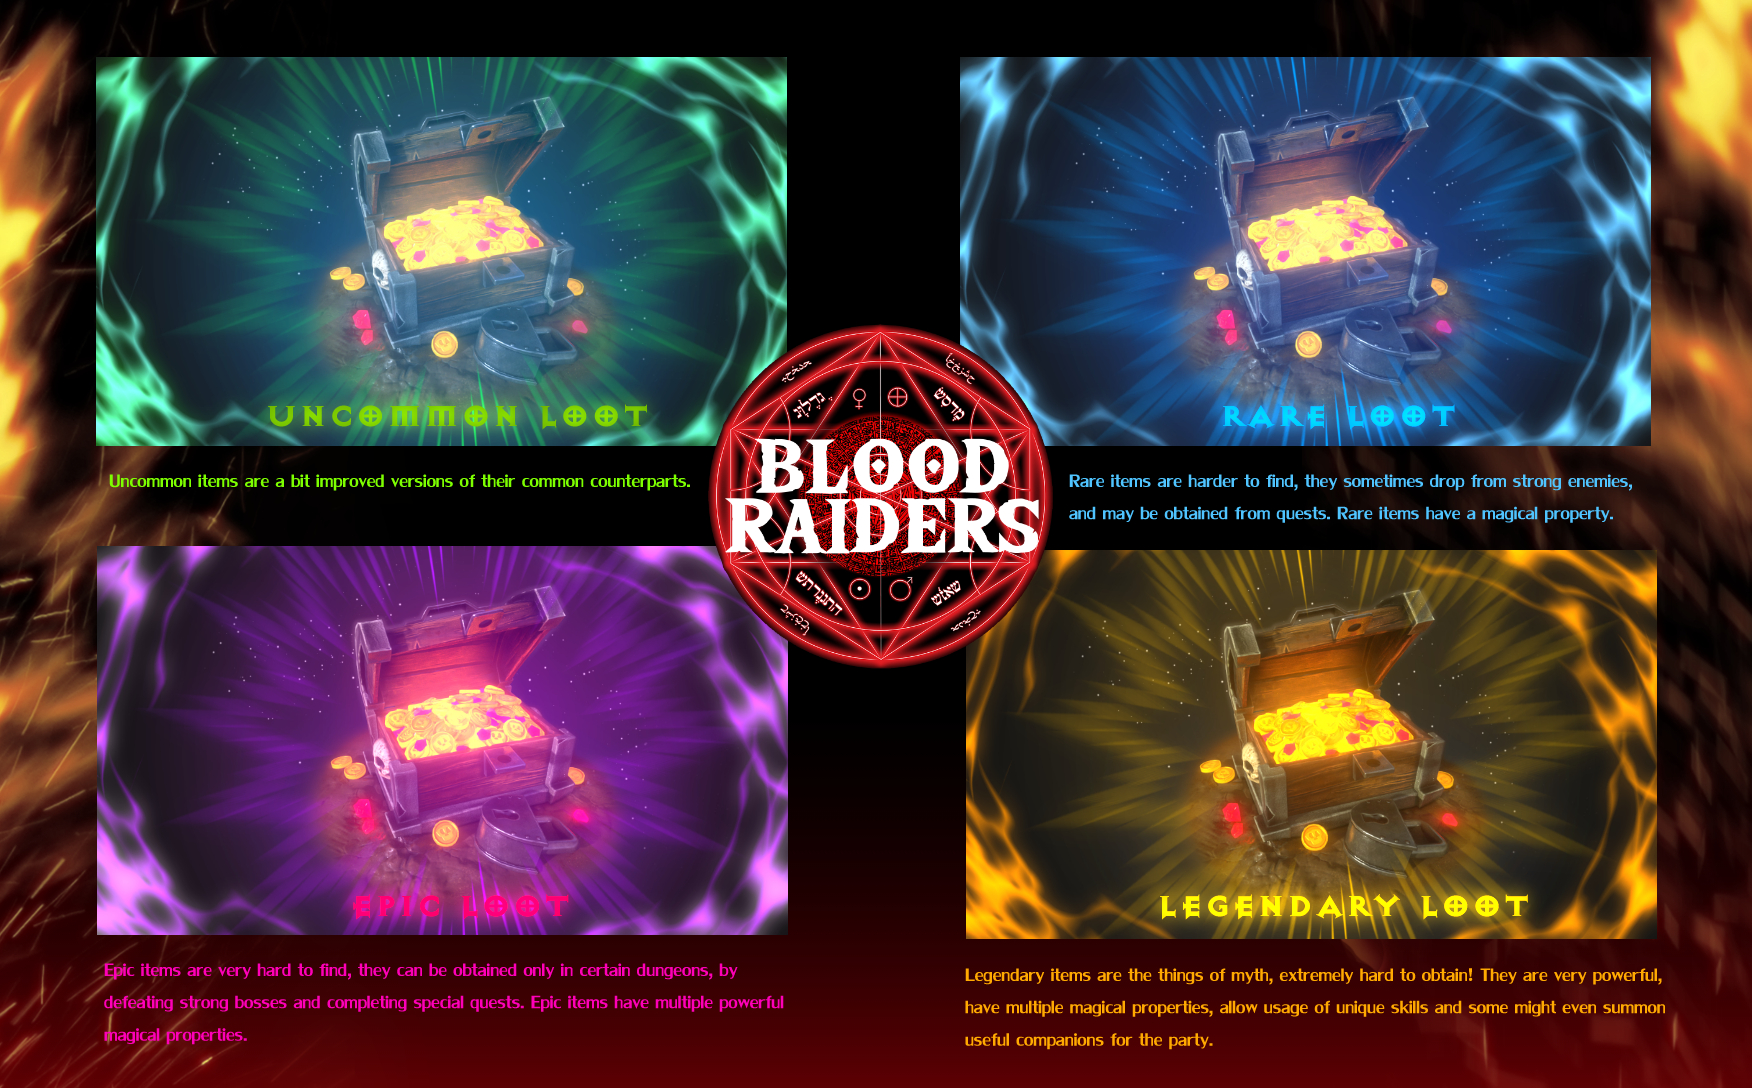 Play BLOOD RAIDERS!